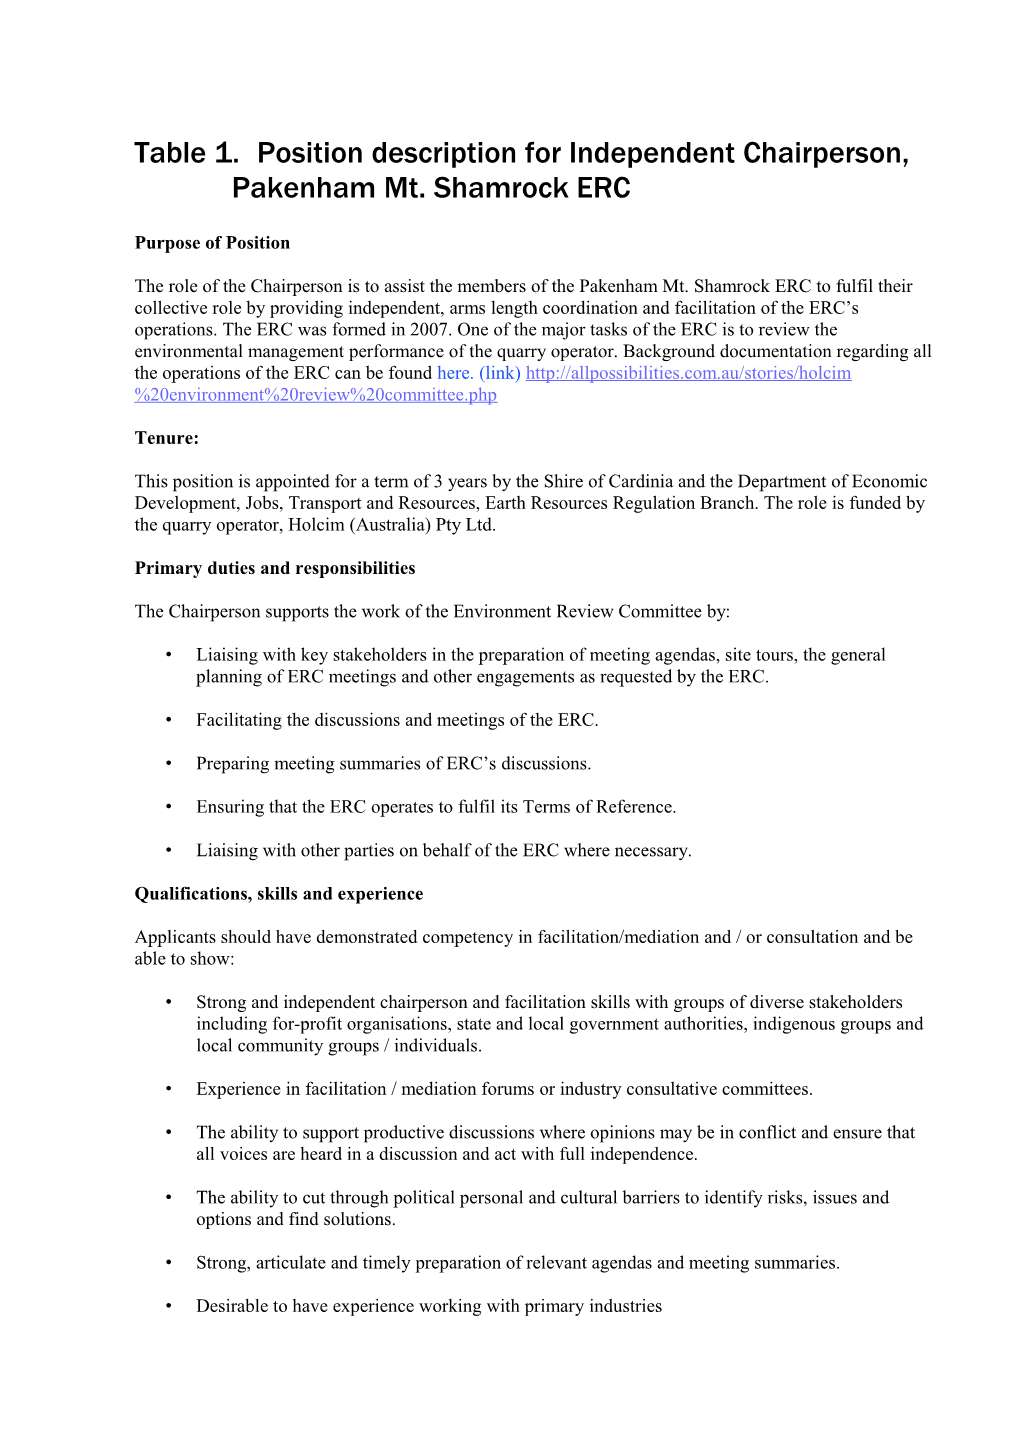 Position Description for Independent Chairperson, Pakenham Mt. Shamrock ERC